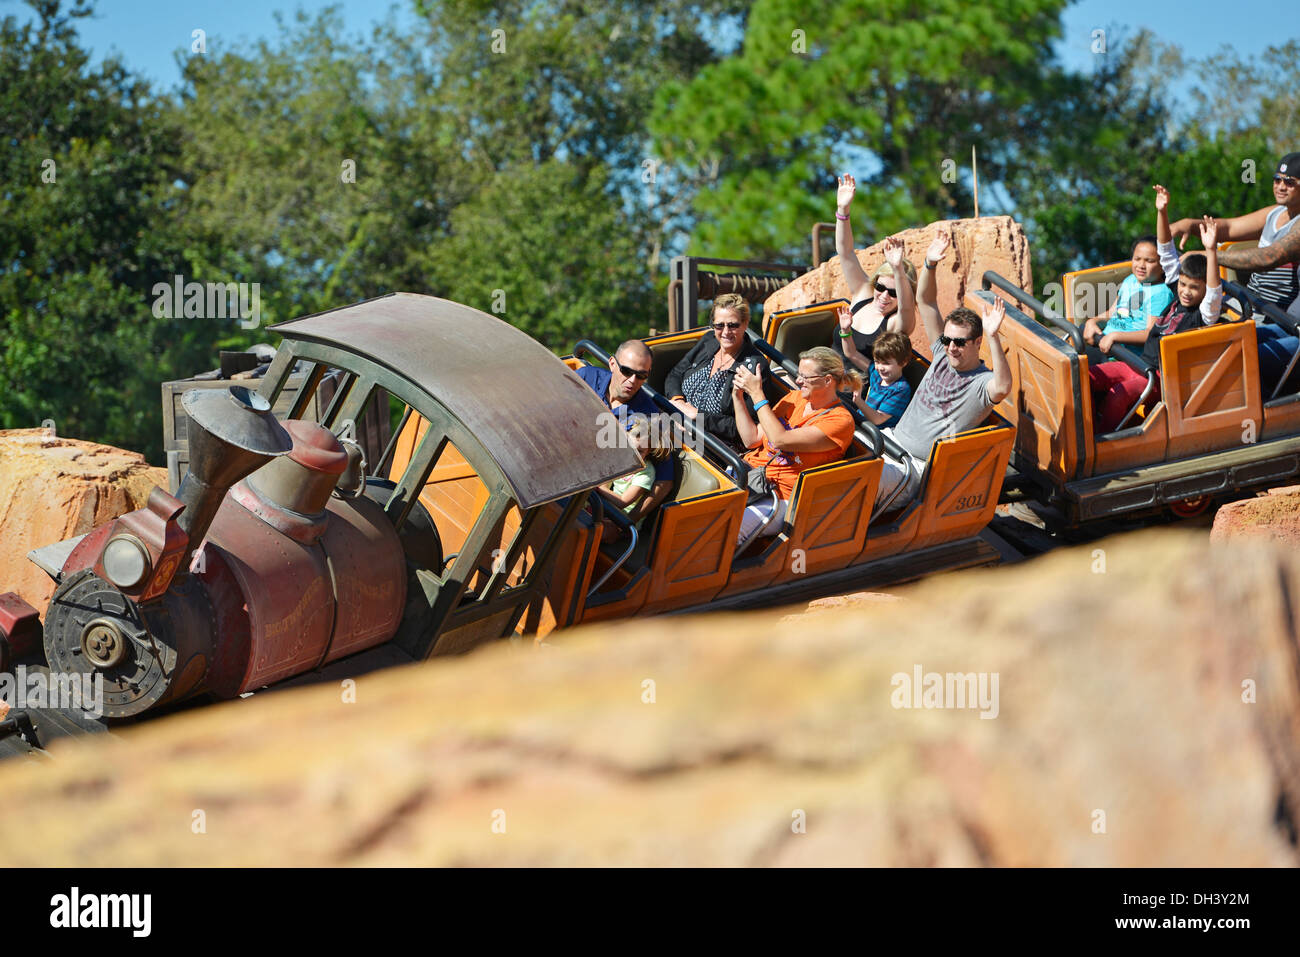 Rides Roller Coaster Big Thunder Mountain Railroad At Adventureland In Magic Kingdom Disney World Orlando Florida Stock Photo Alamy